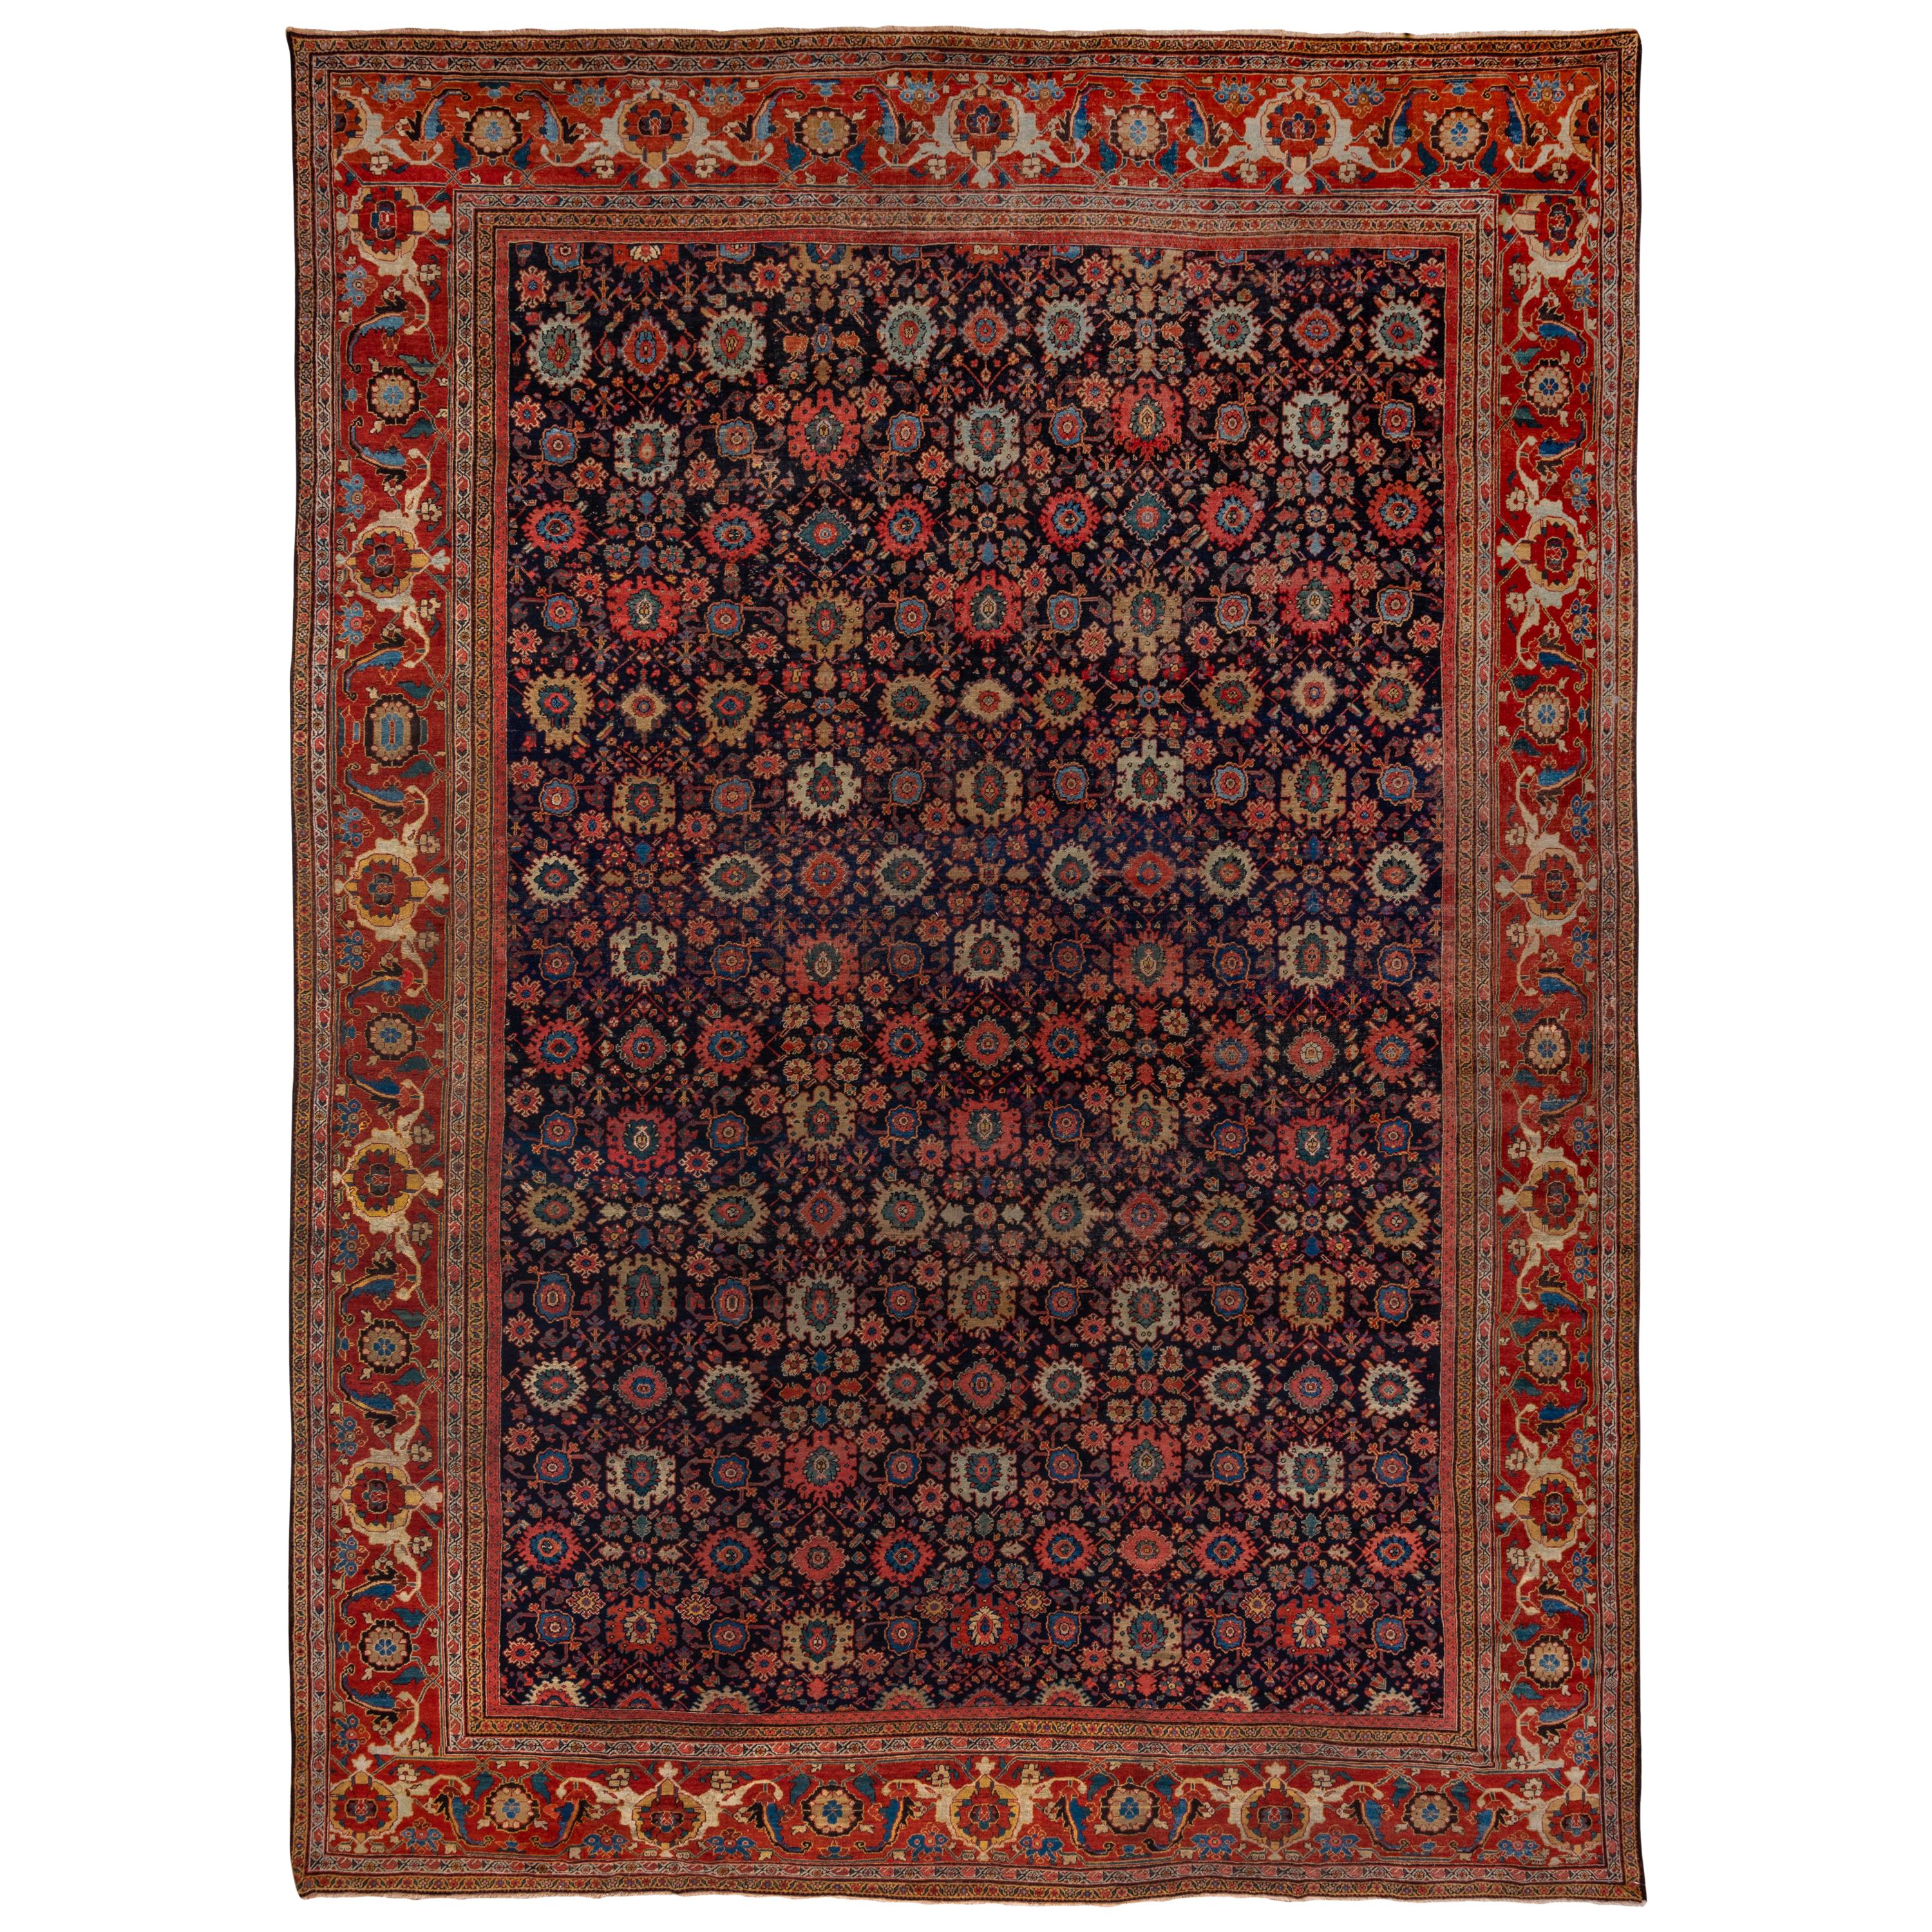 Antique Persian Sultanabad Large Carpet, circa 1900s, Beautiful Colors